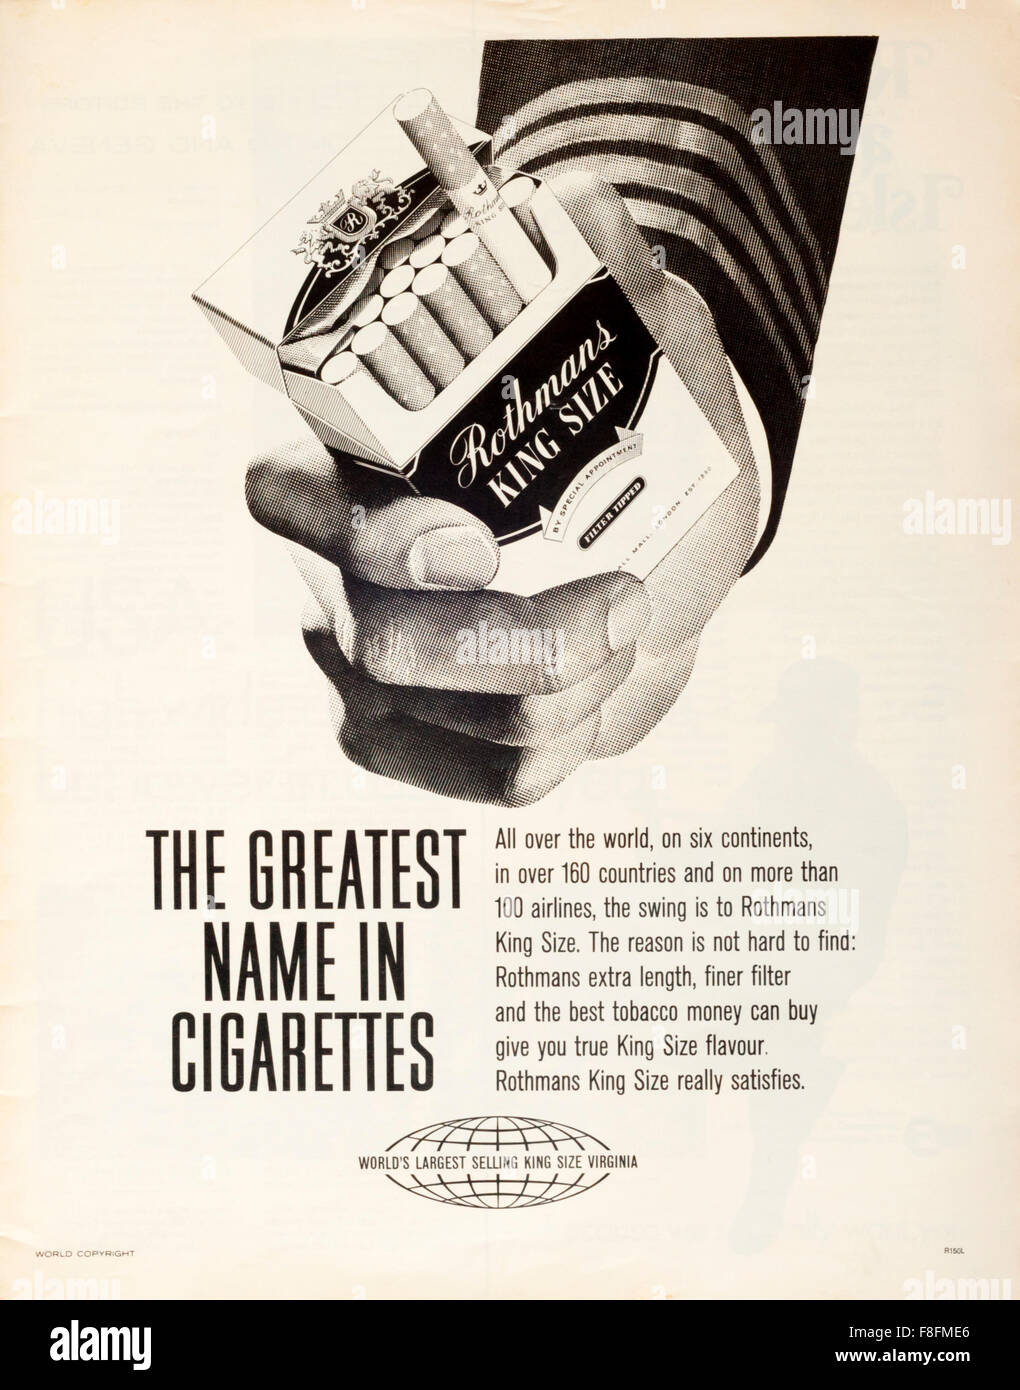 1960s magazine advertisement advertising Rothmans King Size cigarettes. Stock Photo